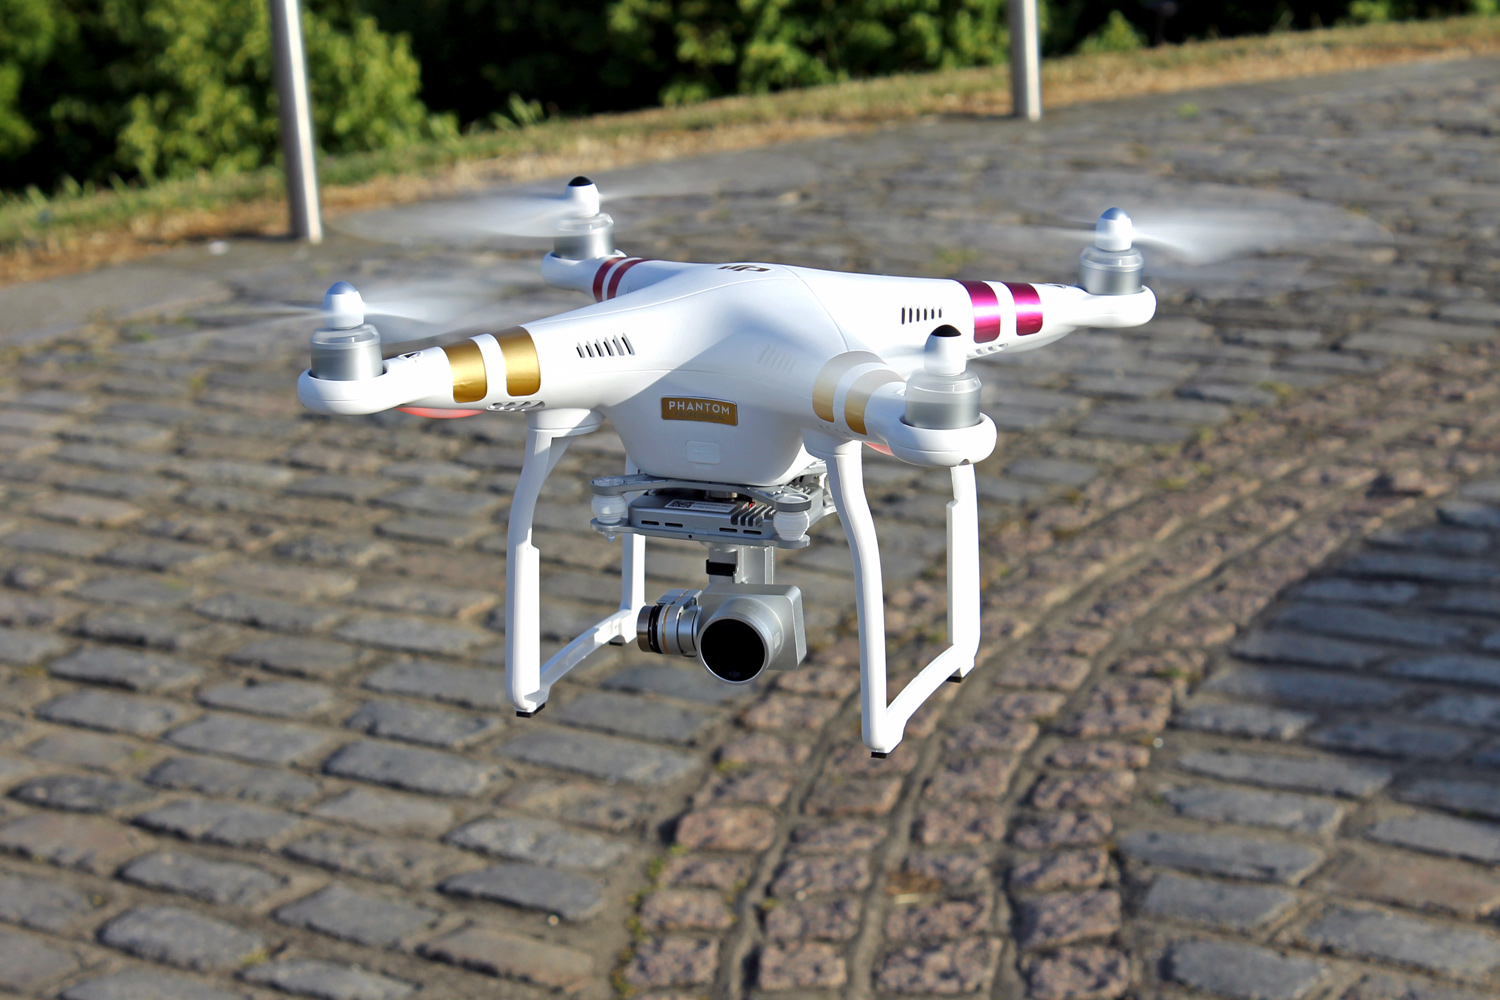 dji-phantom-3-professional-consumer-drone-review.jpg